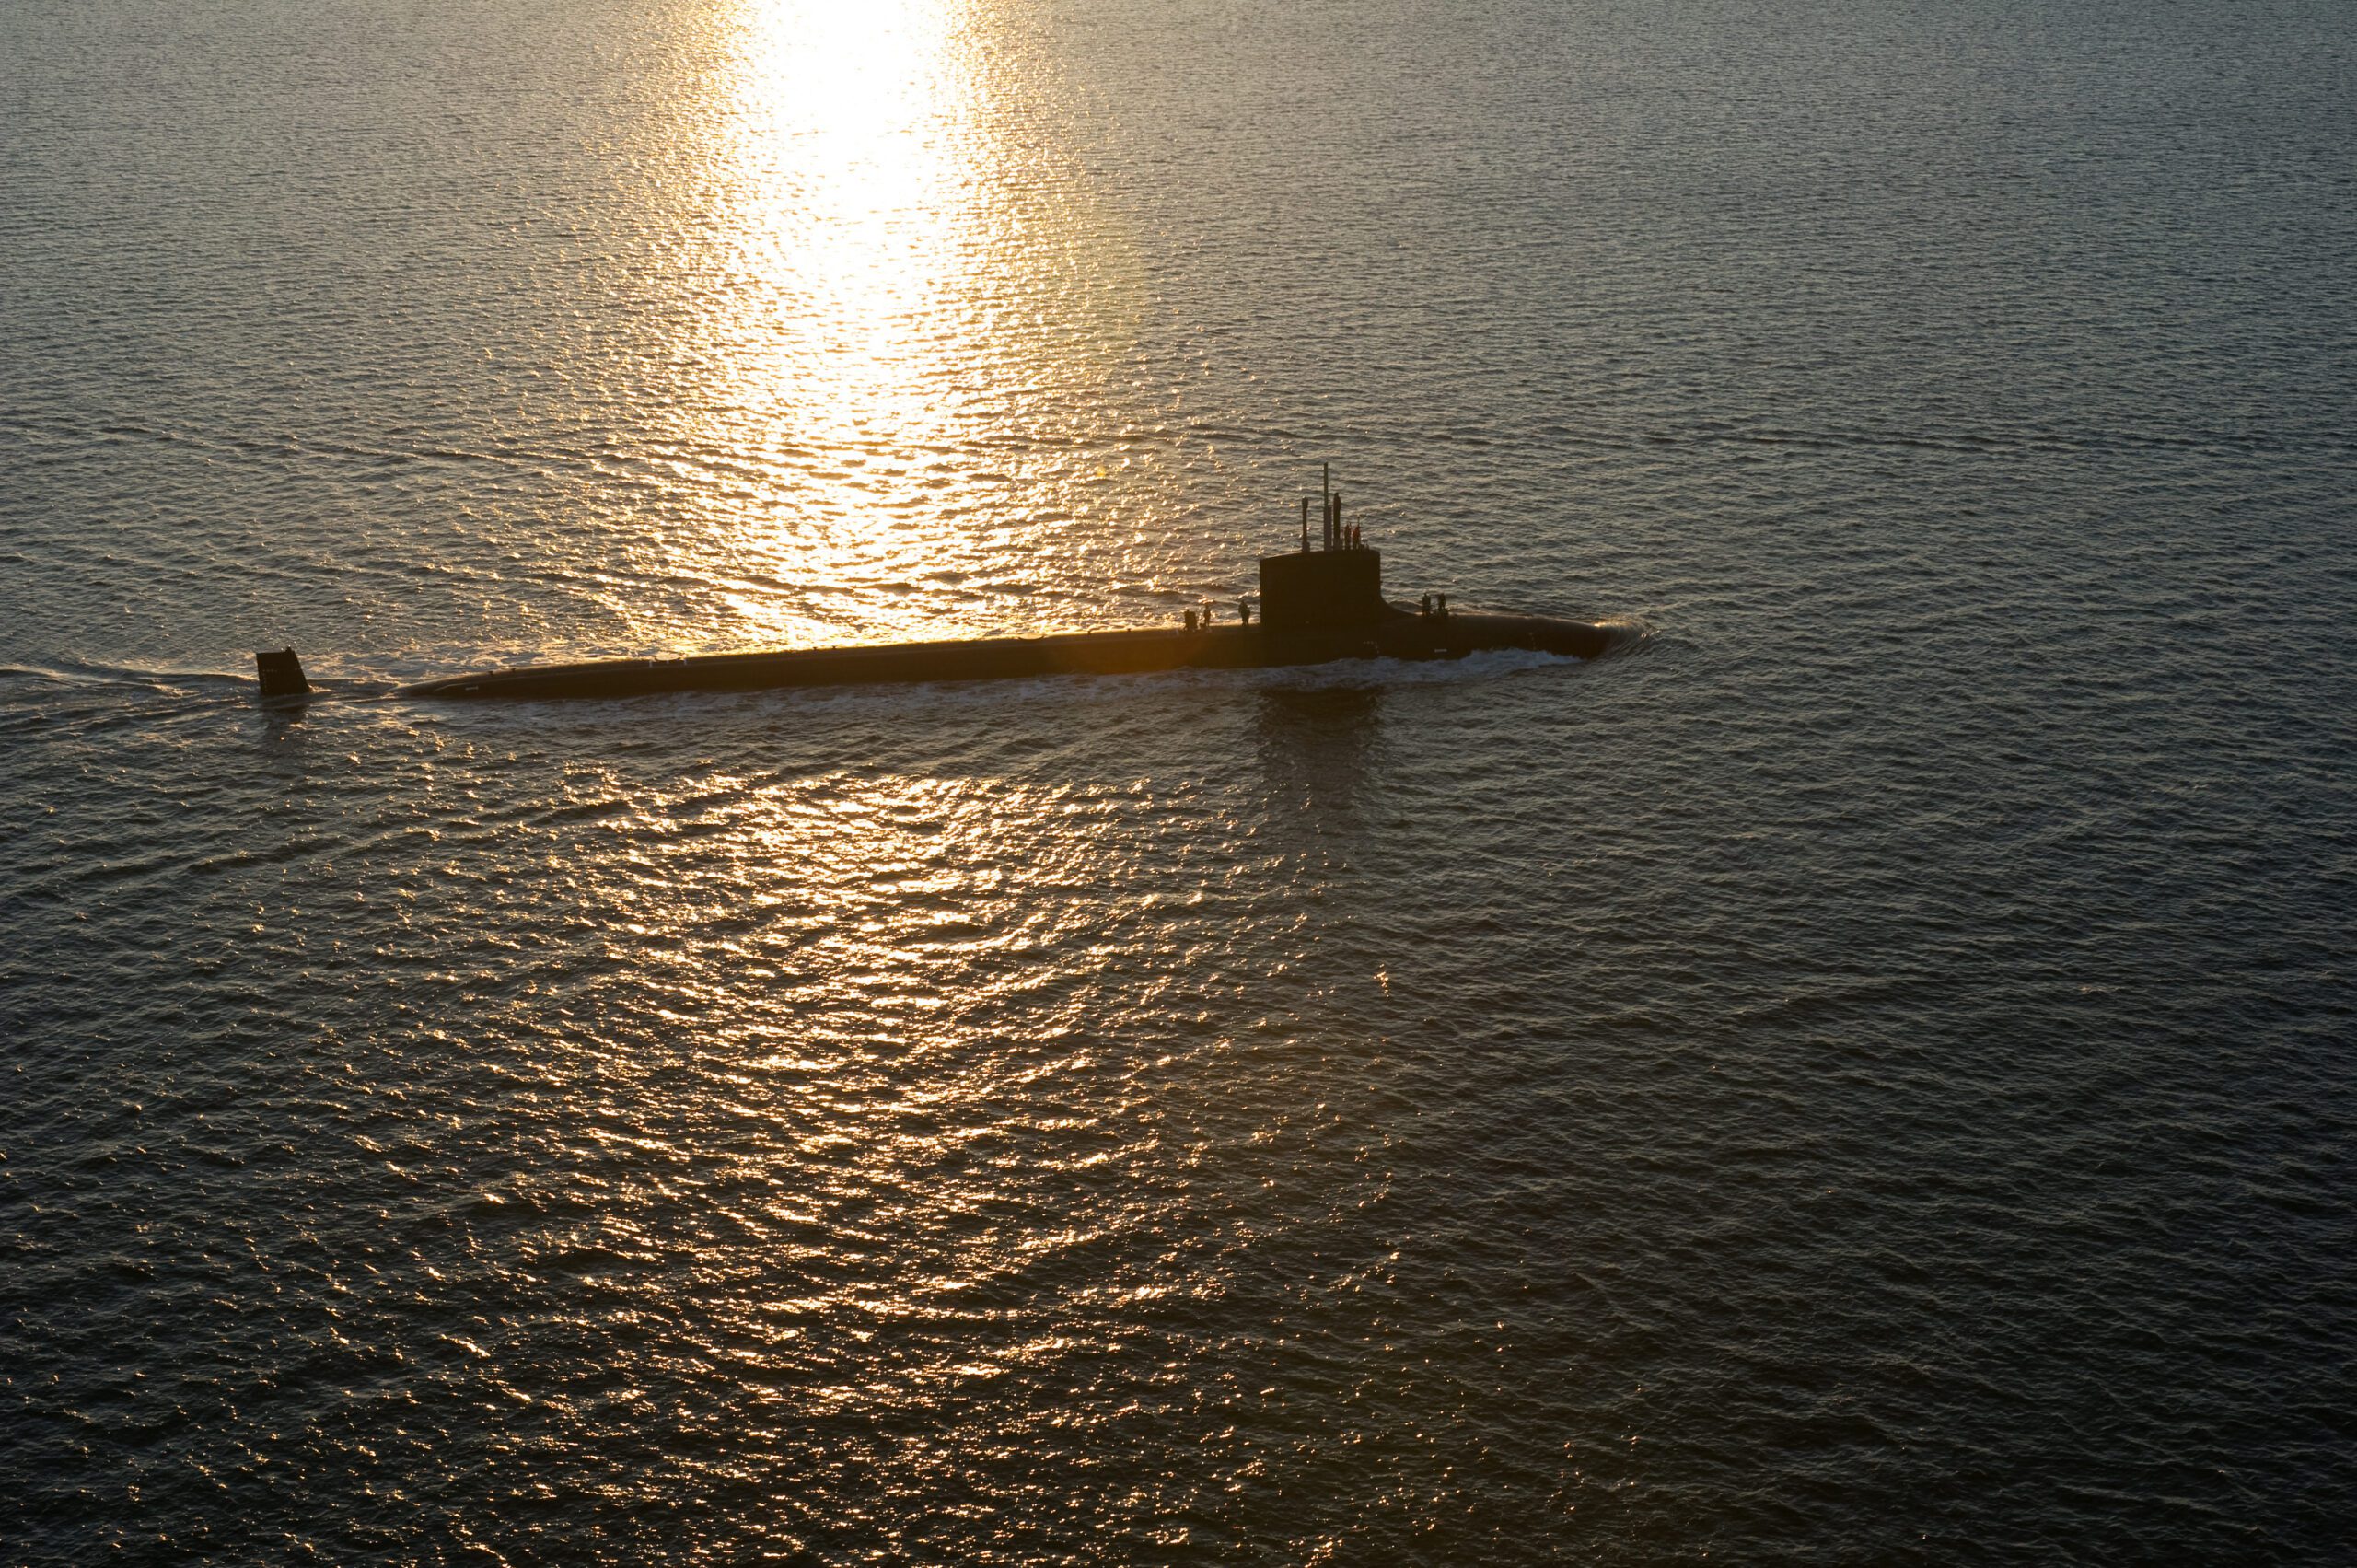 Sea Trials at sunset in the Atlantic ocean of a new Virginia class submarine